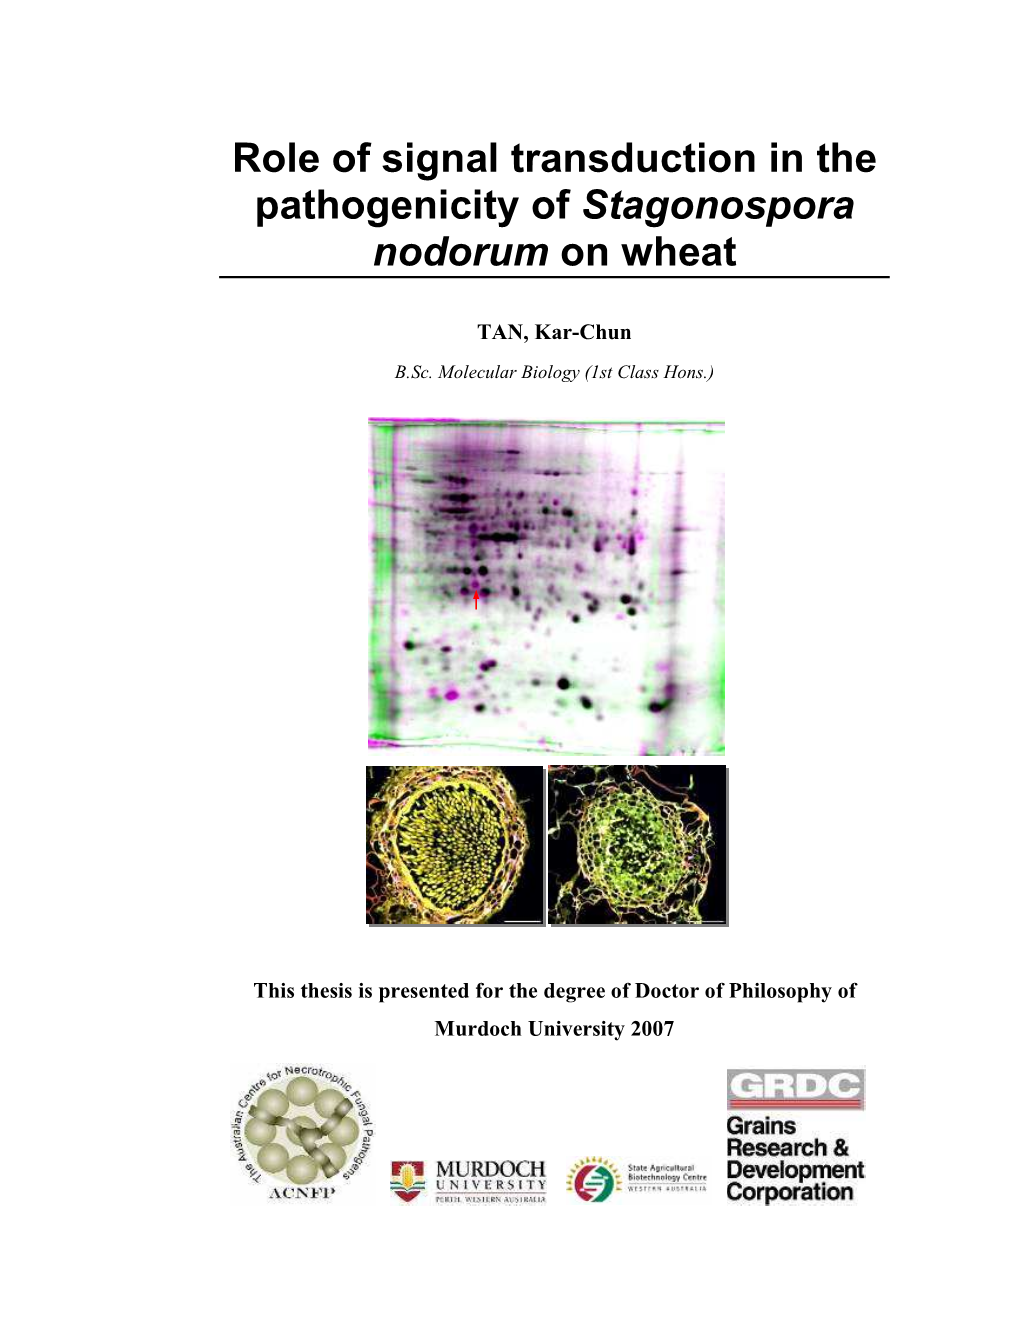 Role of Signal Transduction in the Pathogenicity of Stagonospora Nodorum on Wheat 